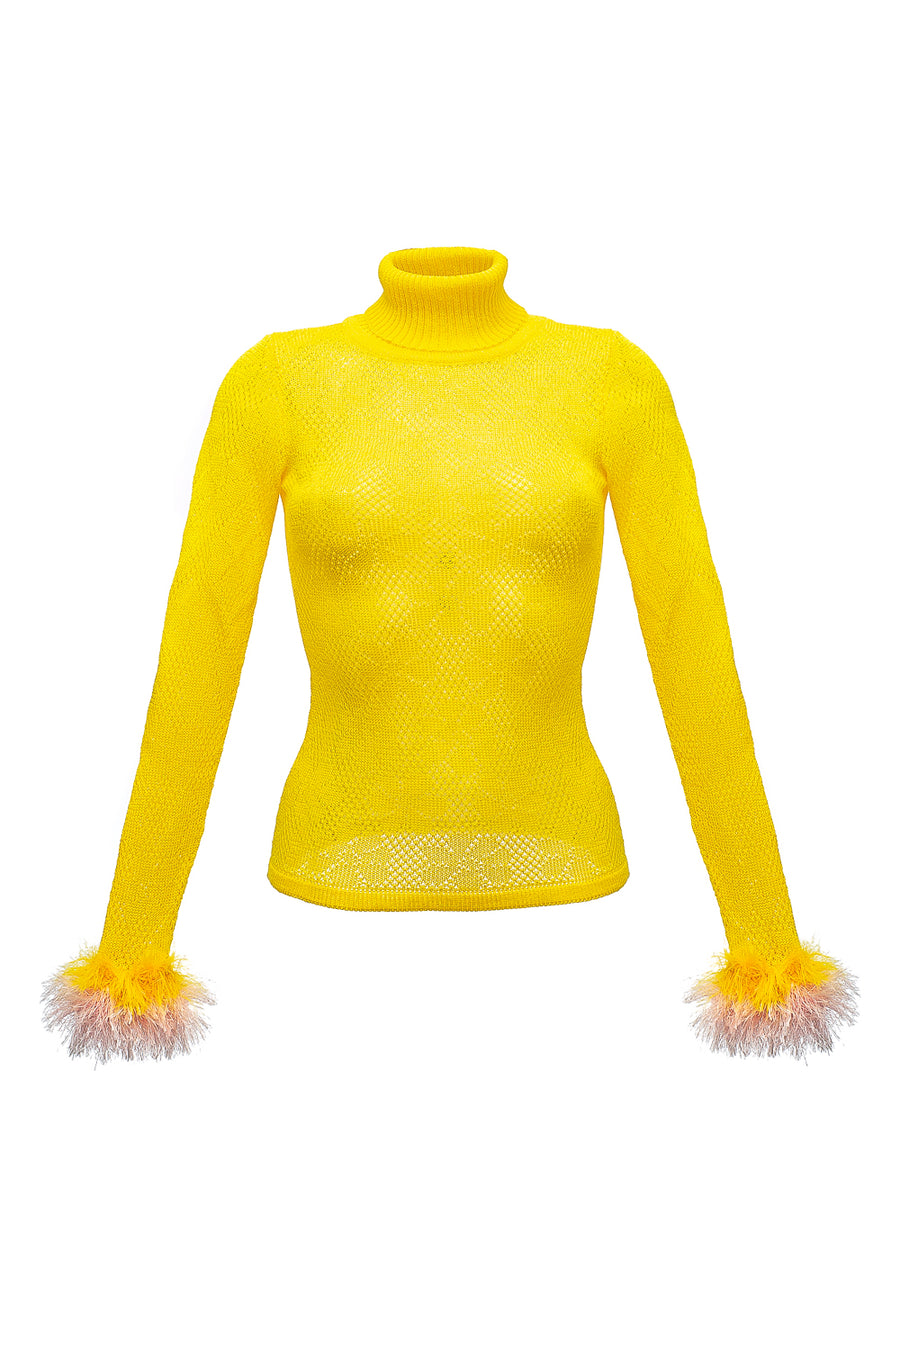 andreeva yellow knit turtleneck